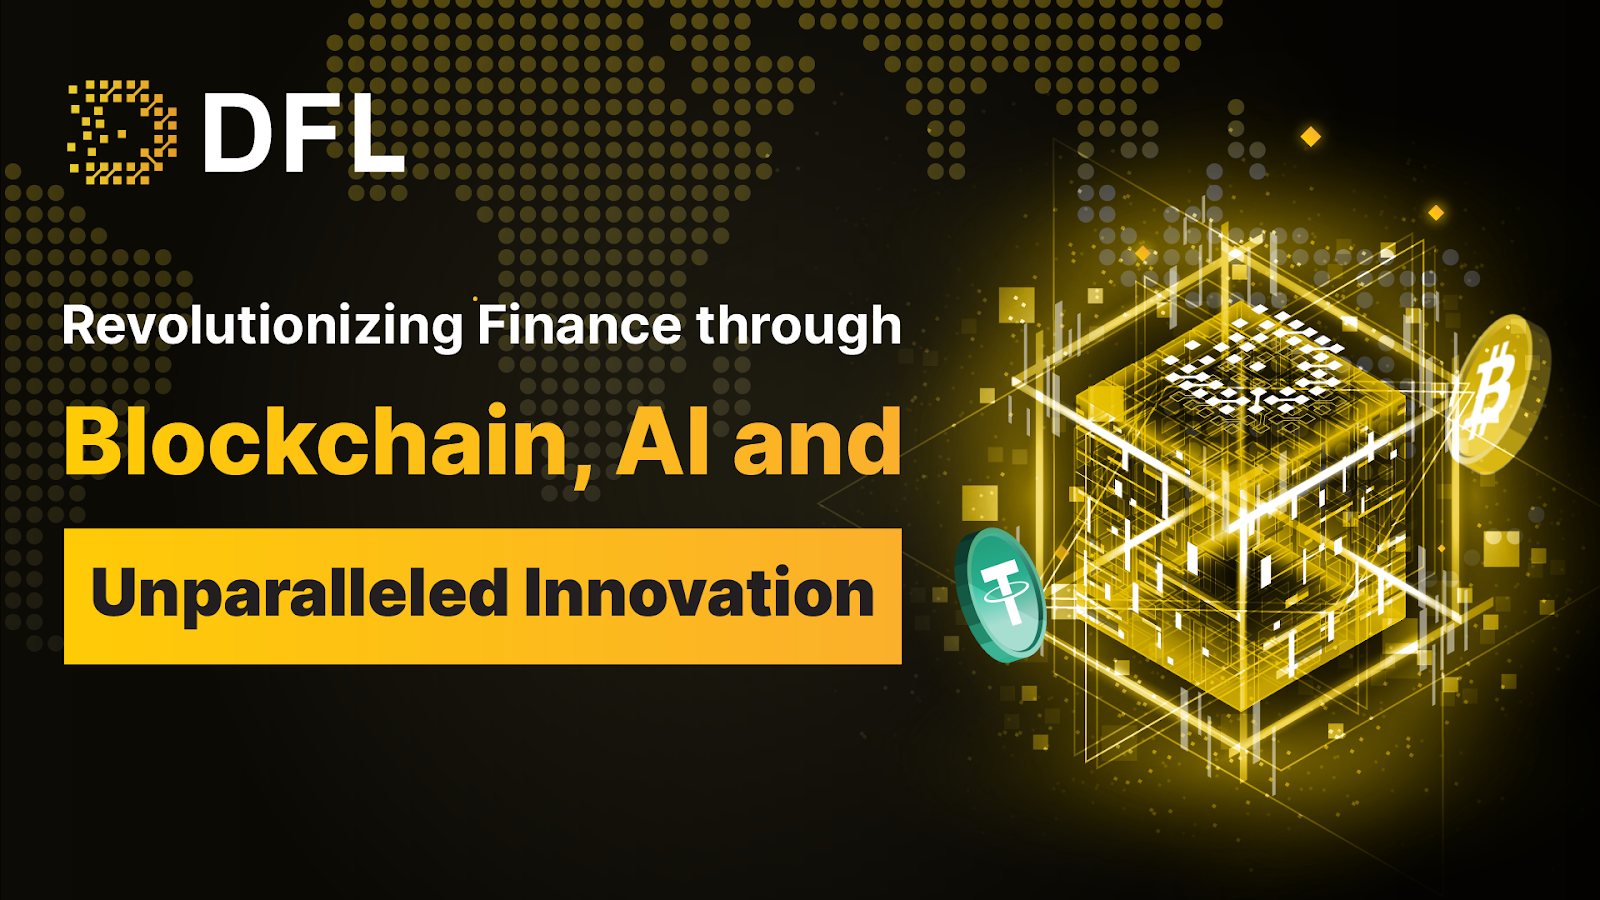 DFL: Revolutionizing Finance through Blockchain, AI, and Unparalleled Innovation